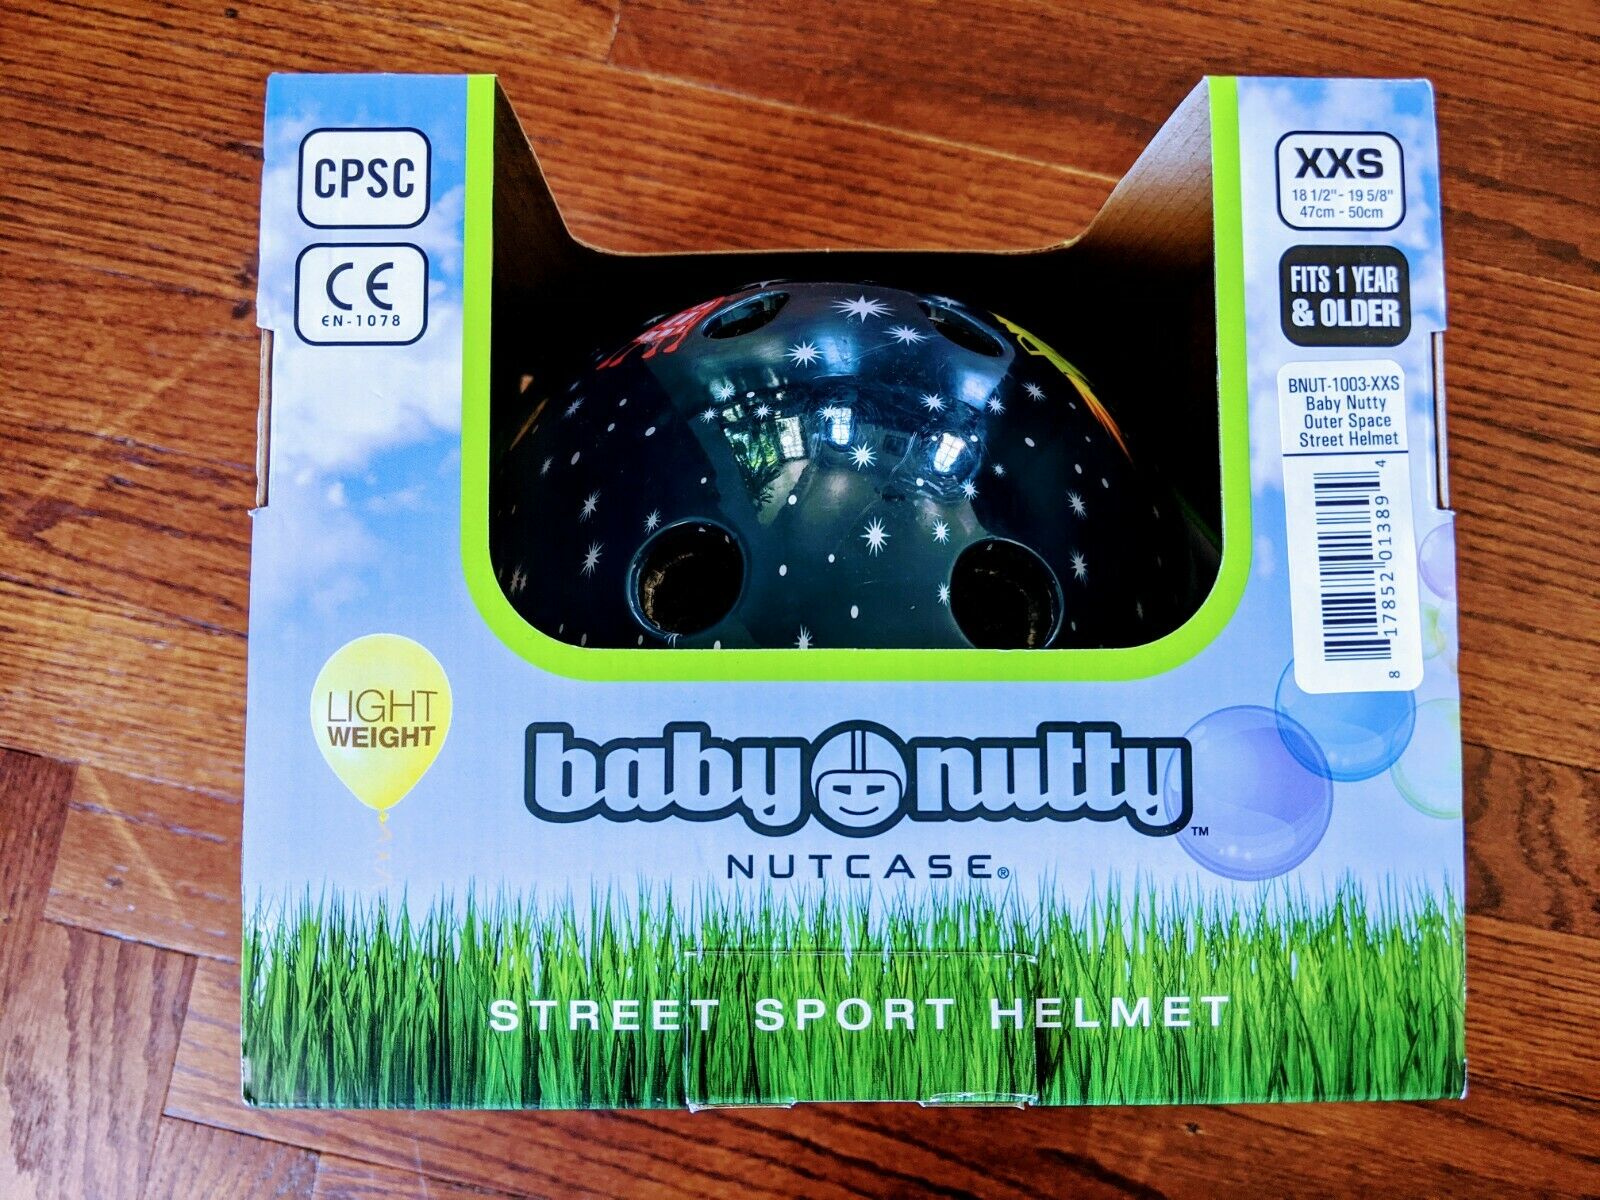 Nutcase Baby Nutty Xxs Helmet - Outer Space Model